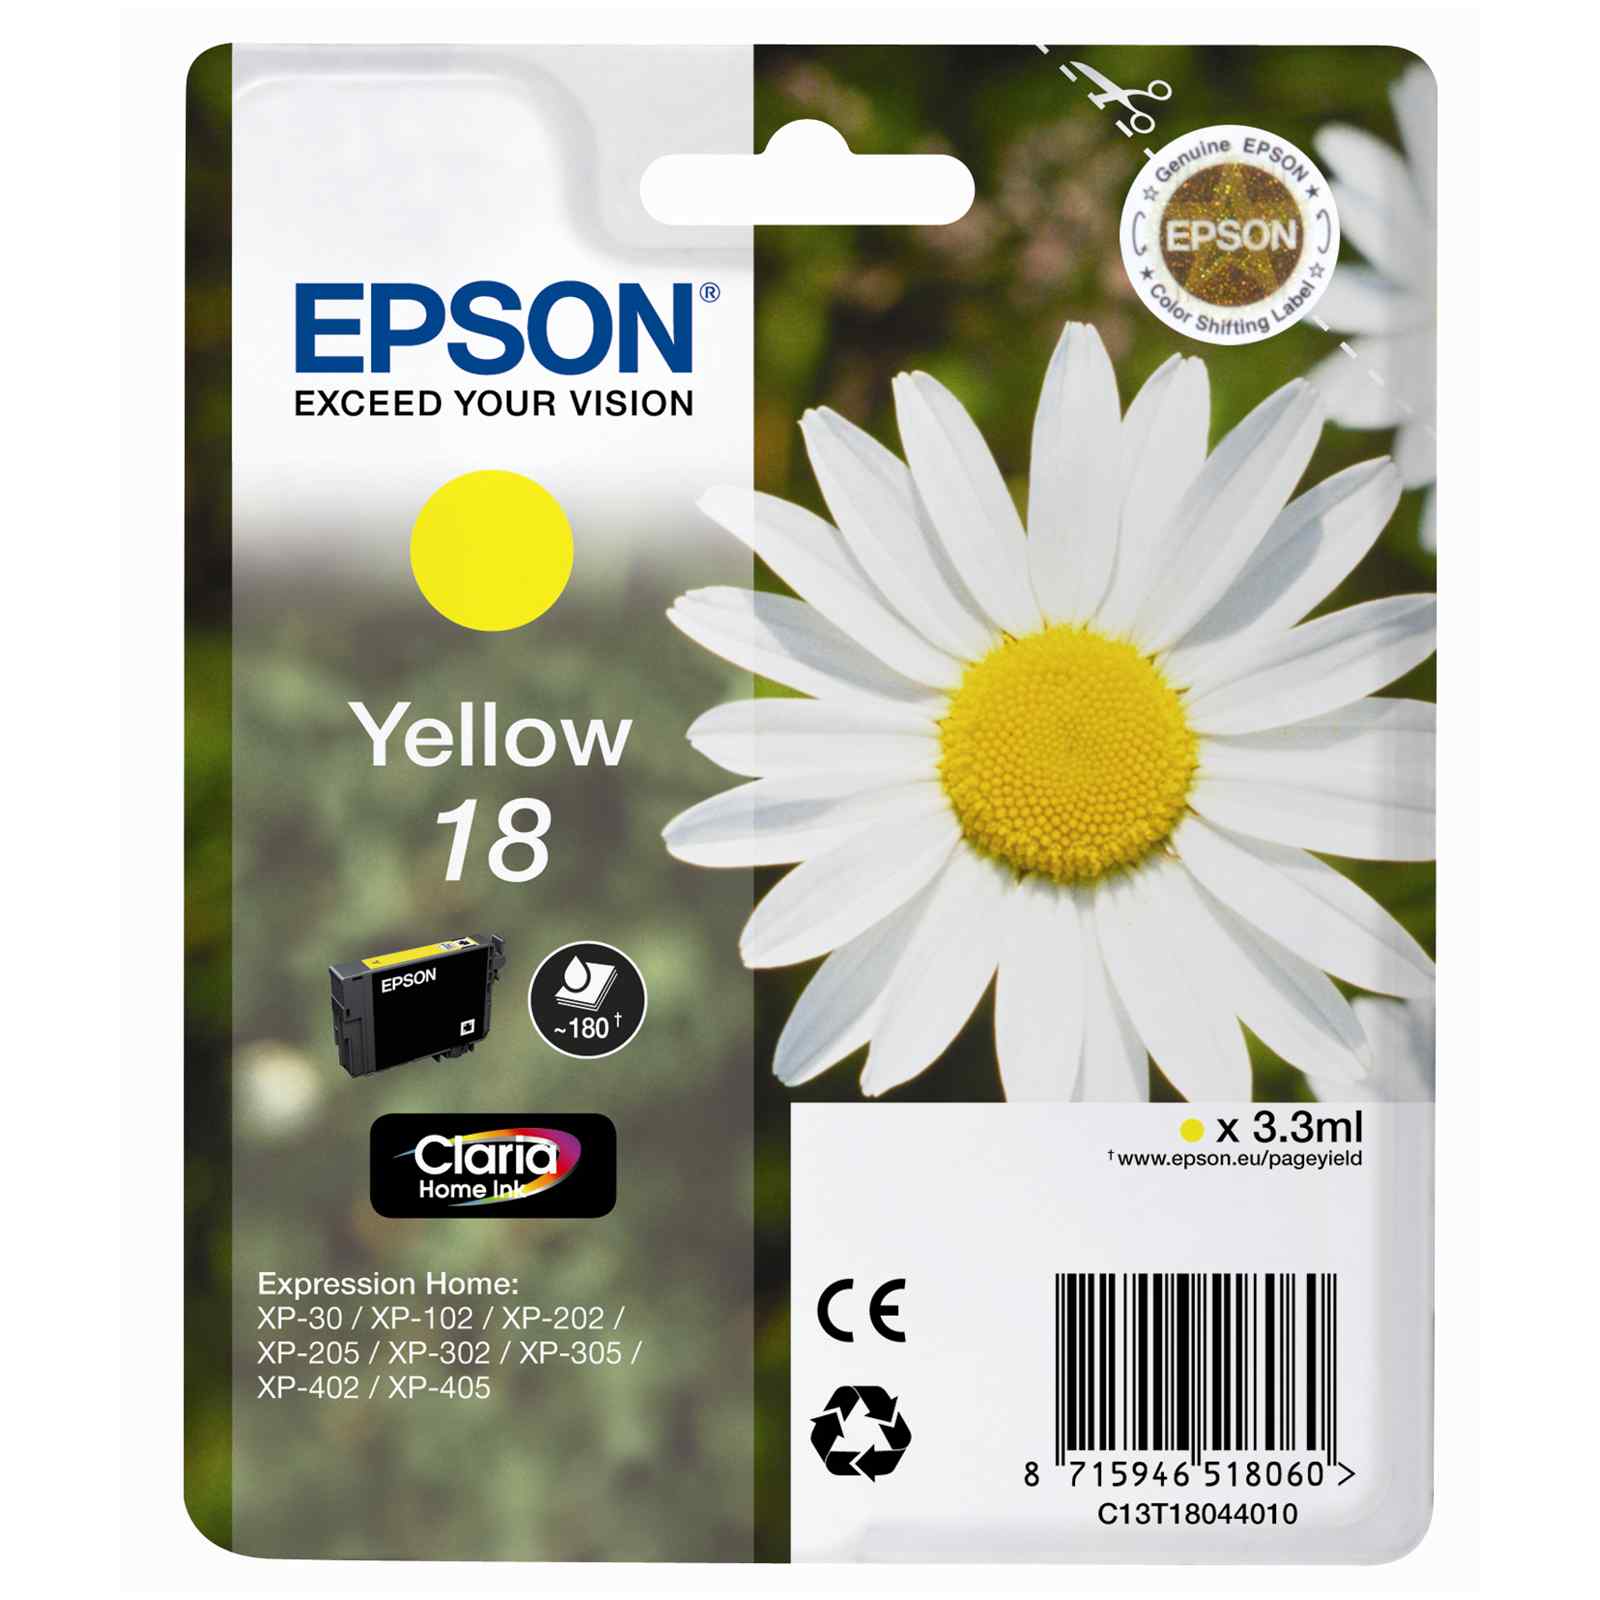 Epson Original 18 T1804 Daisy Ink Cartridge 3.3ml Yellow